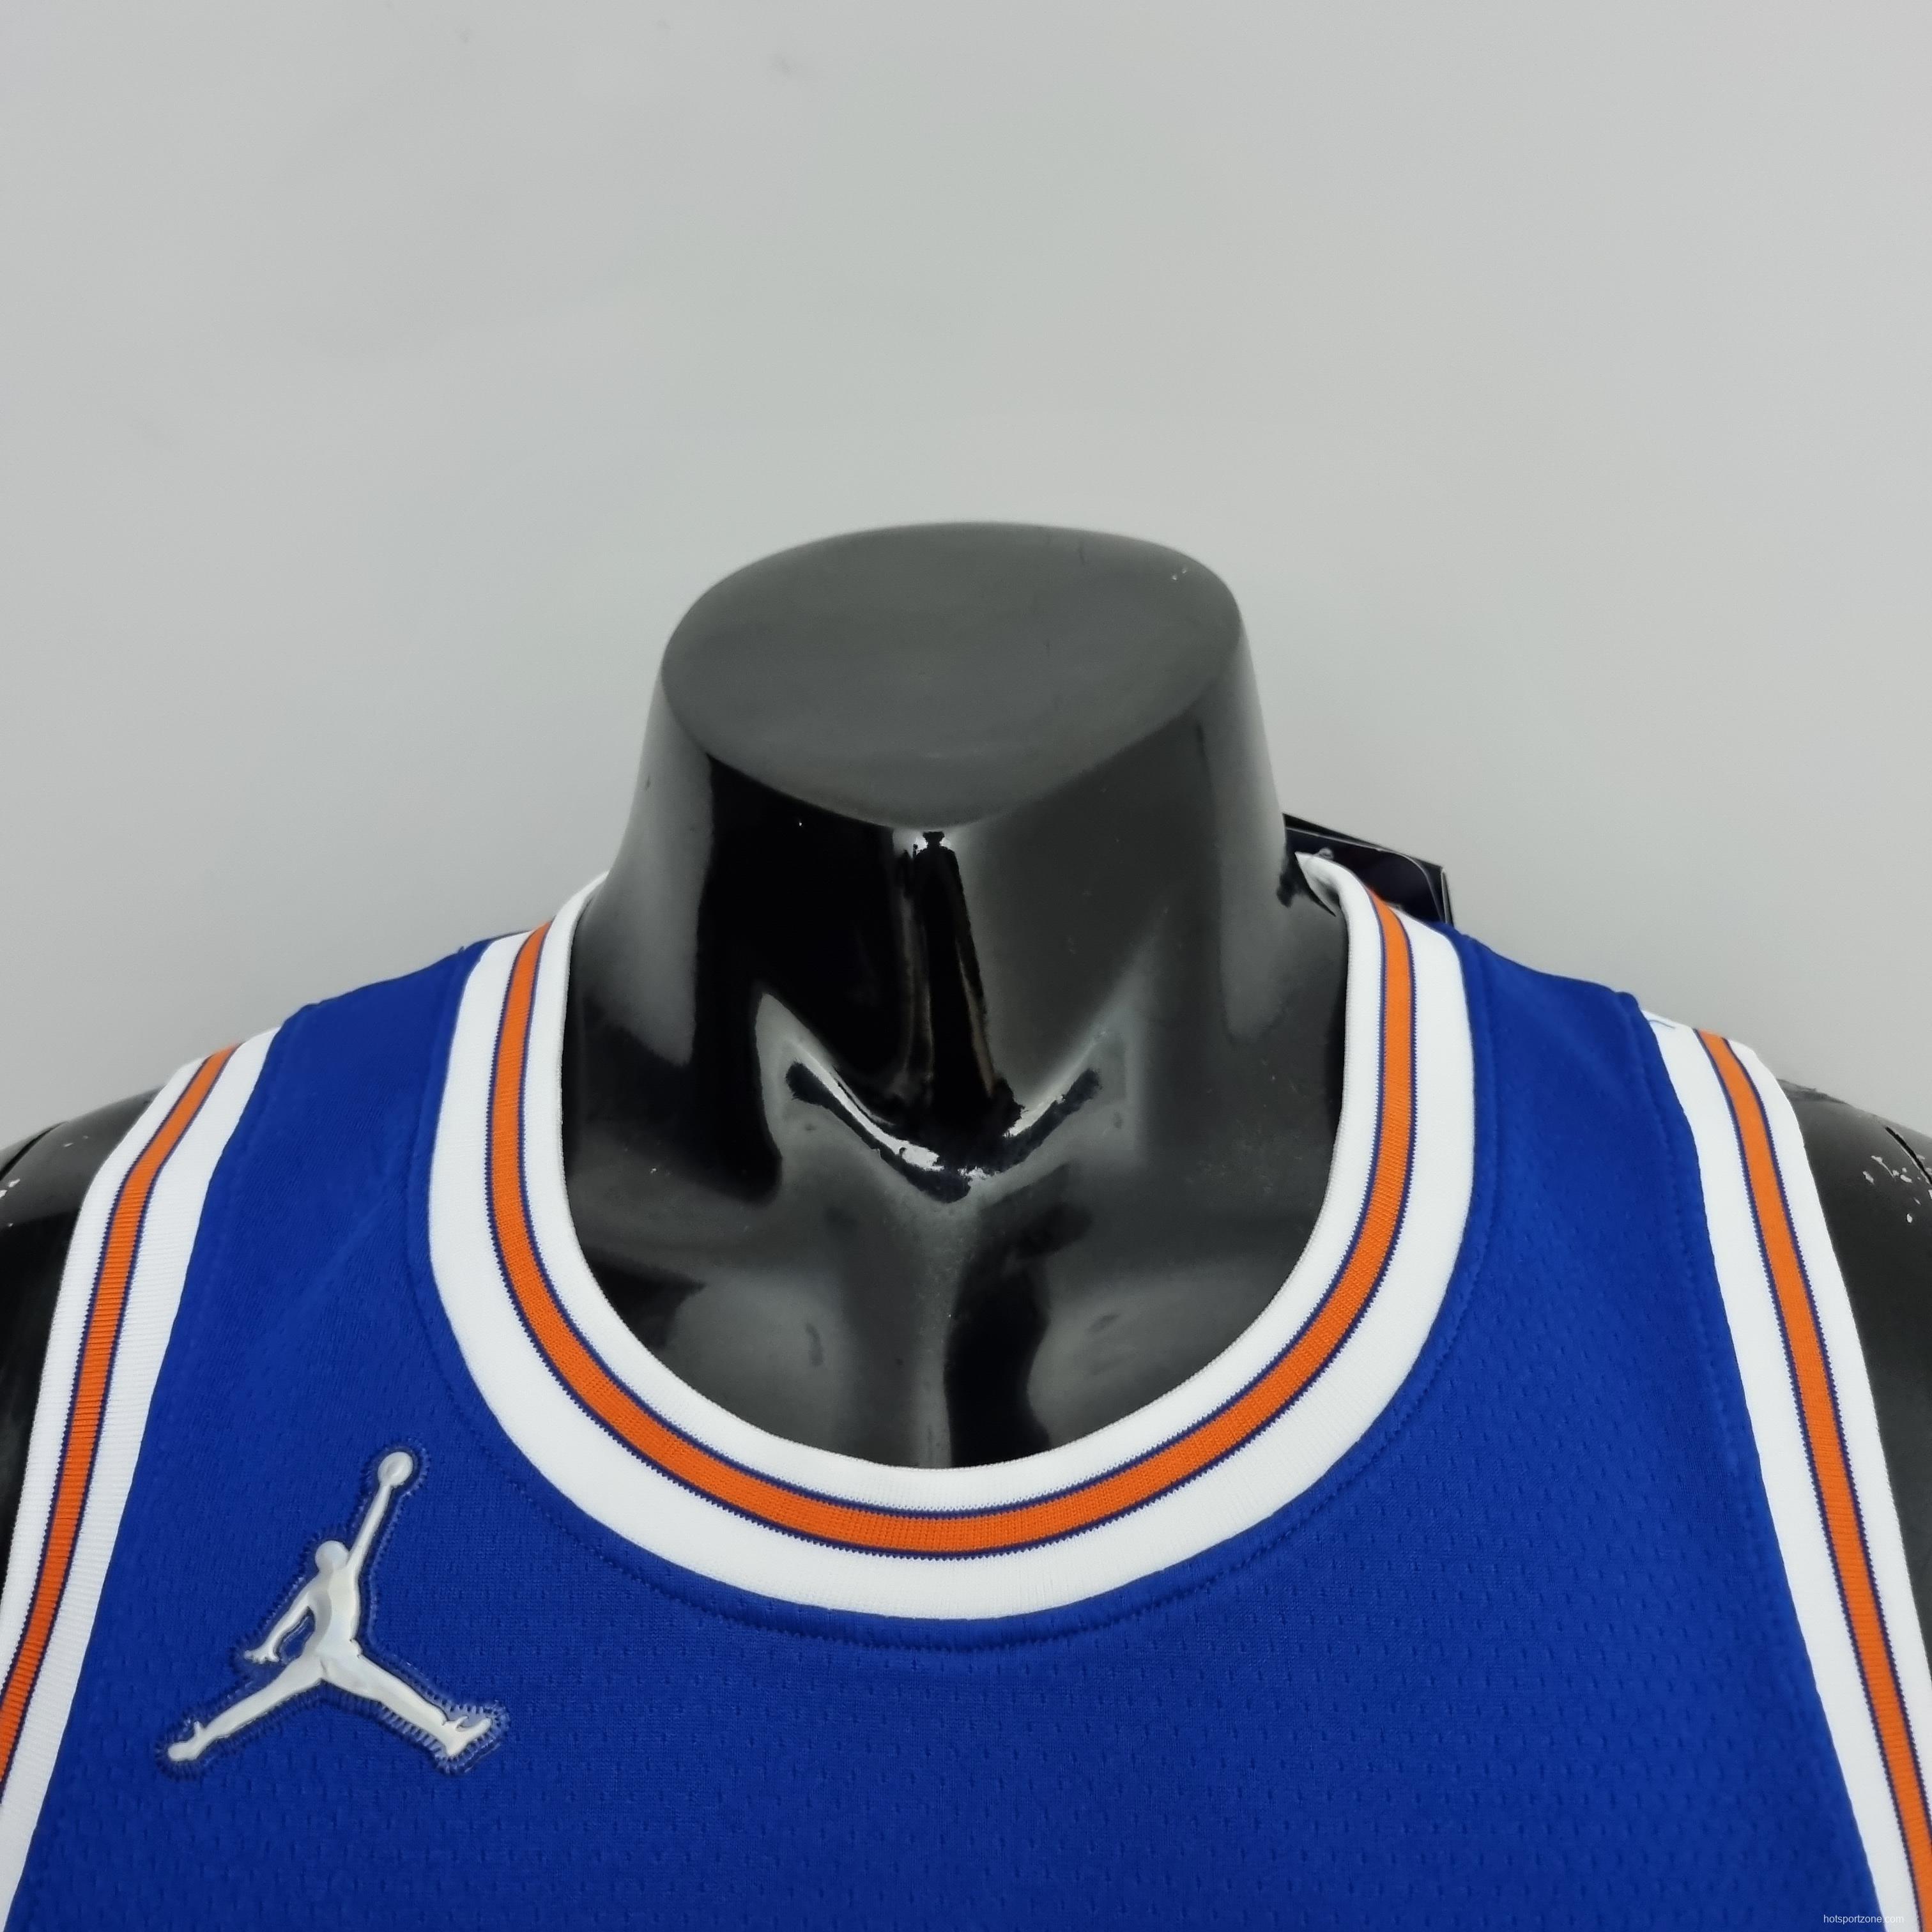 75th Anniversary Anthony #7 New York Knicks Jordan Limited Blue NBA Jersey